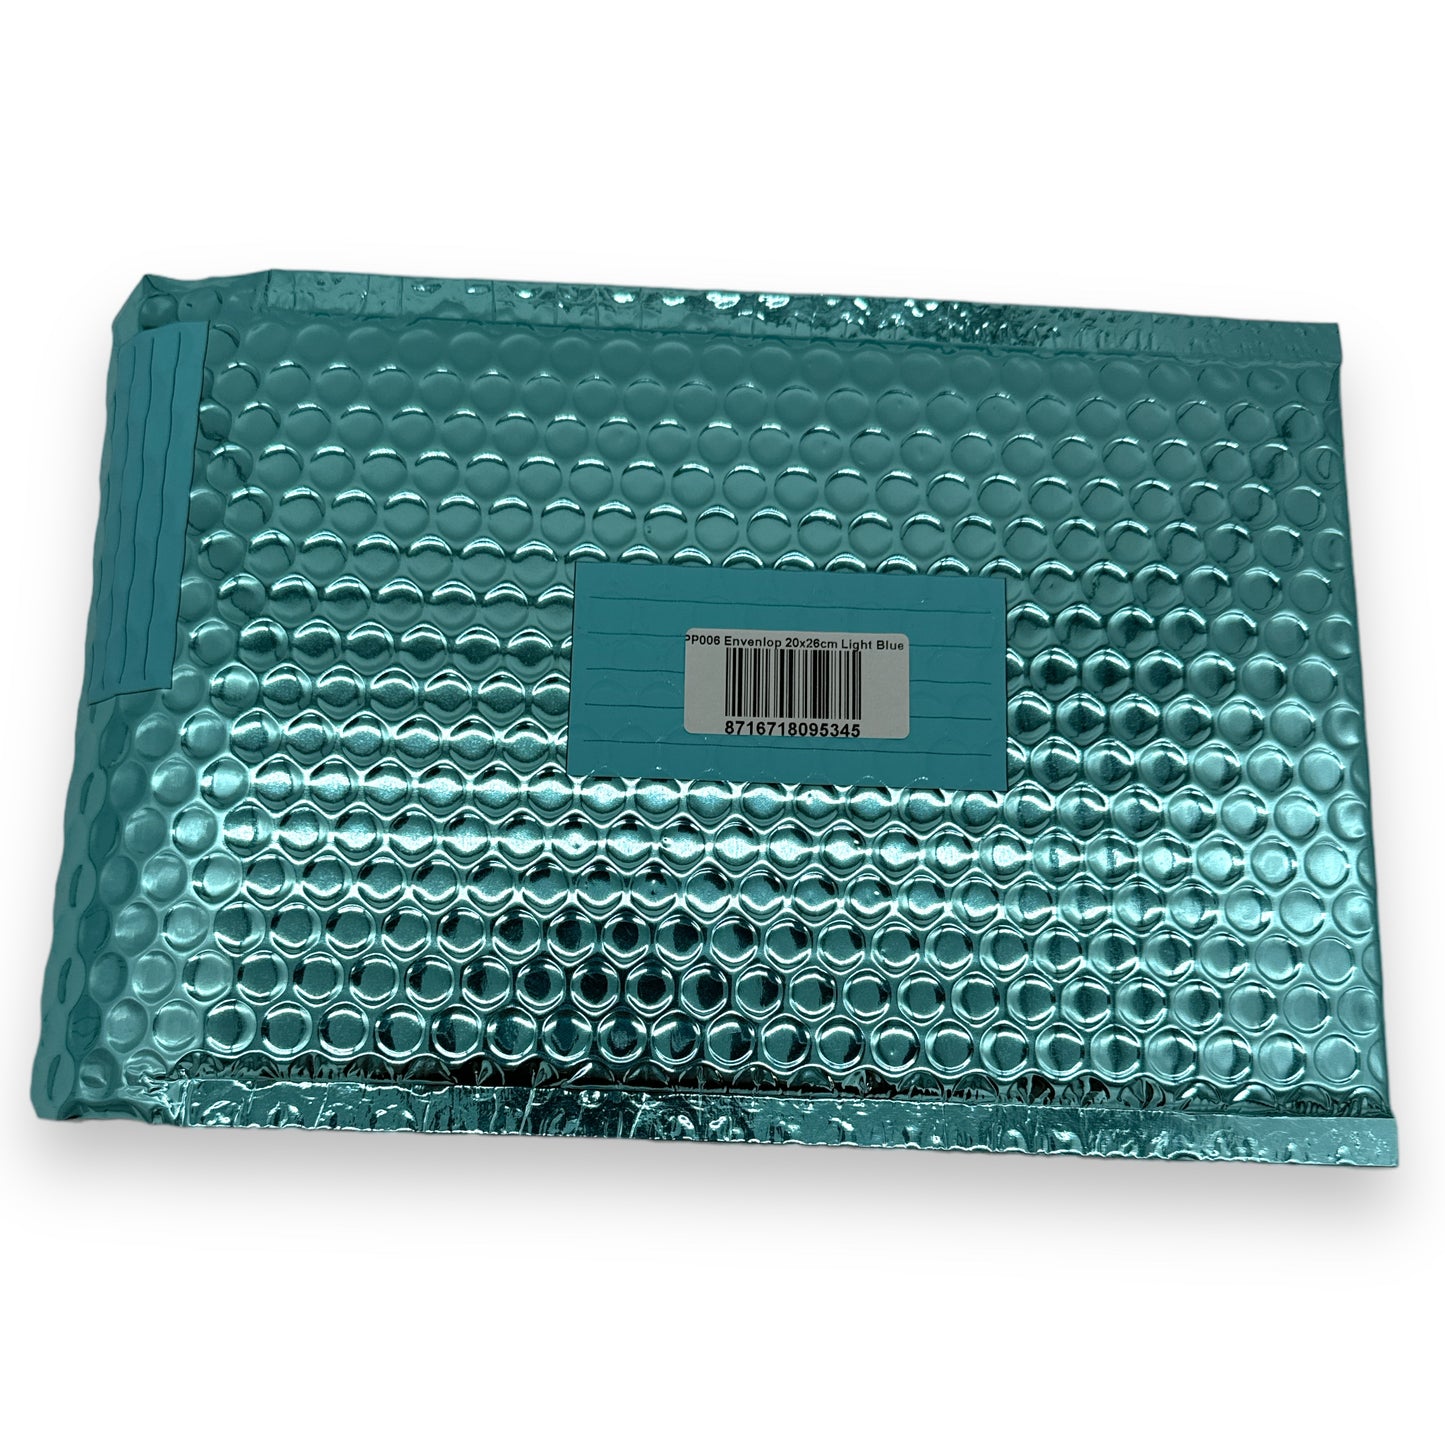 Timmy Toys - PP006 - Metallic Glossy Bubble Envelop - 20X26cm - Light Blue - 1 Piece